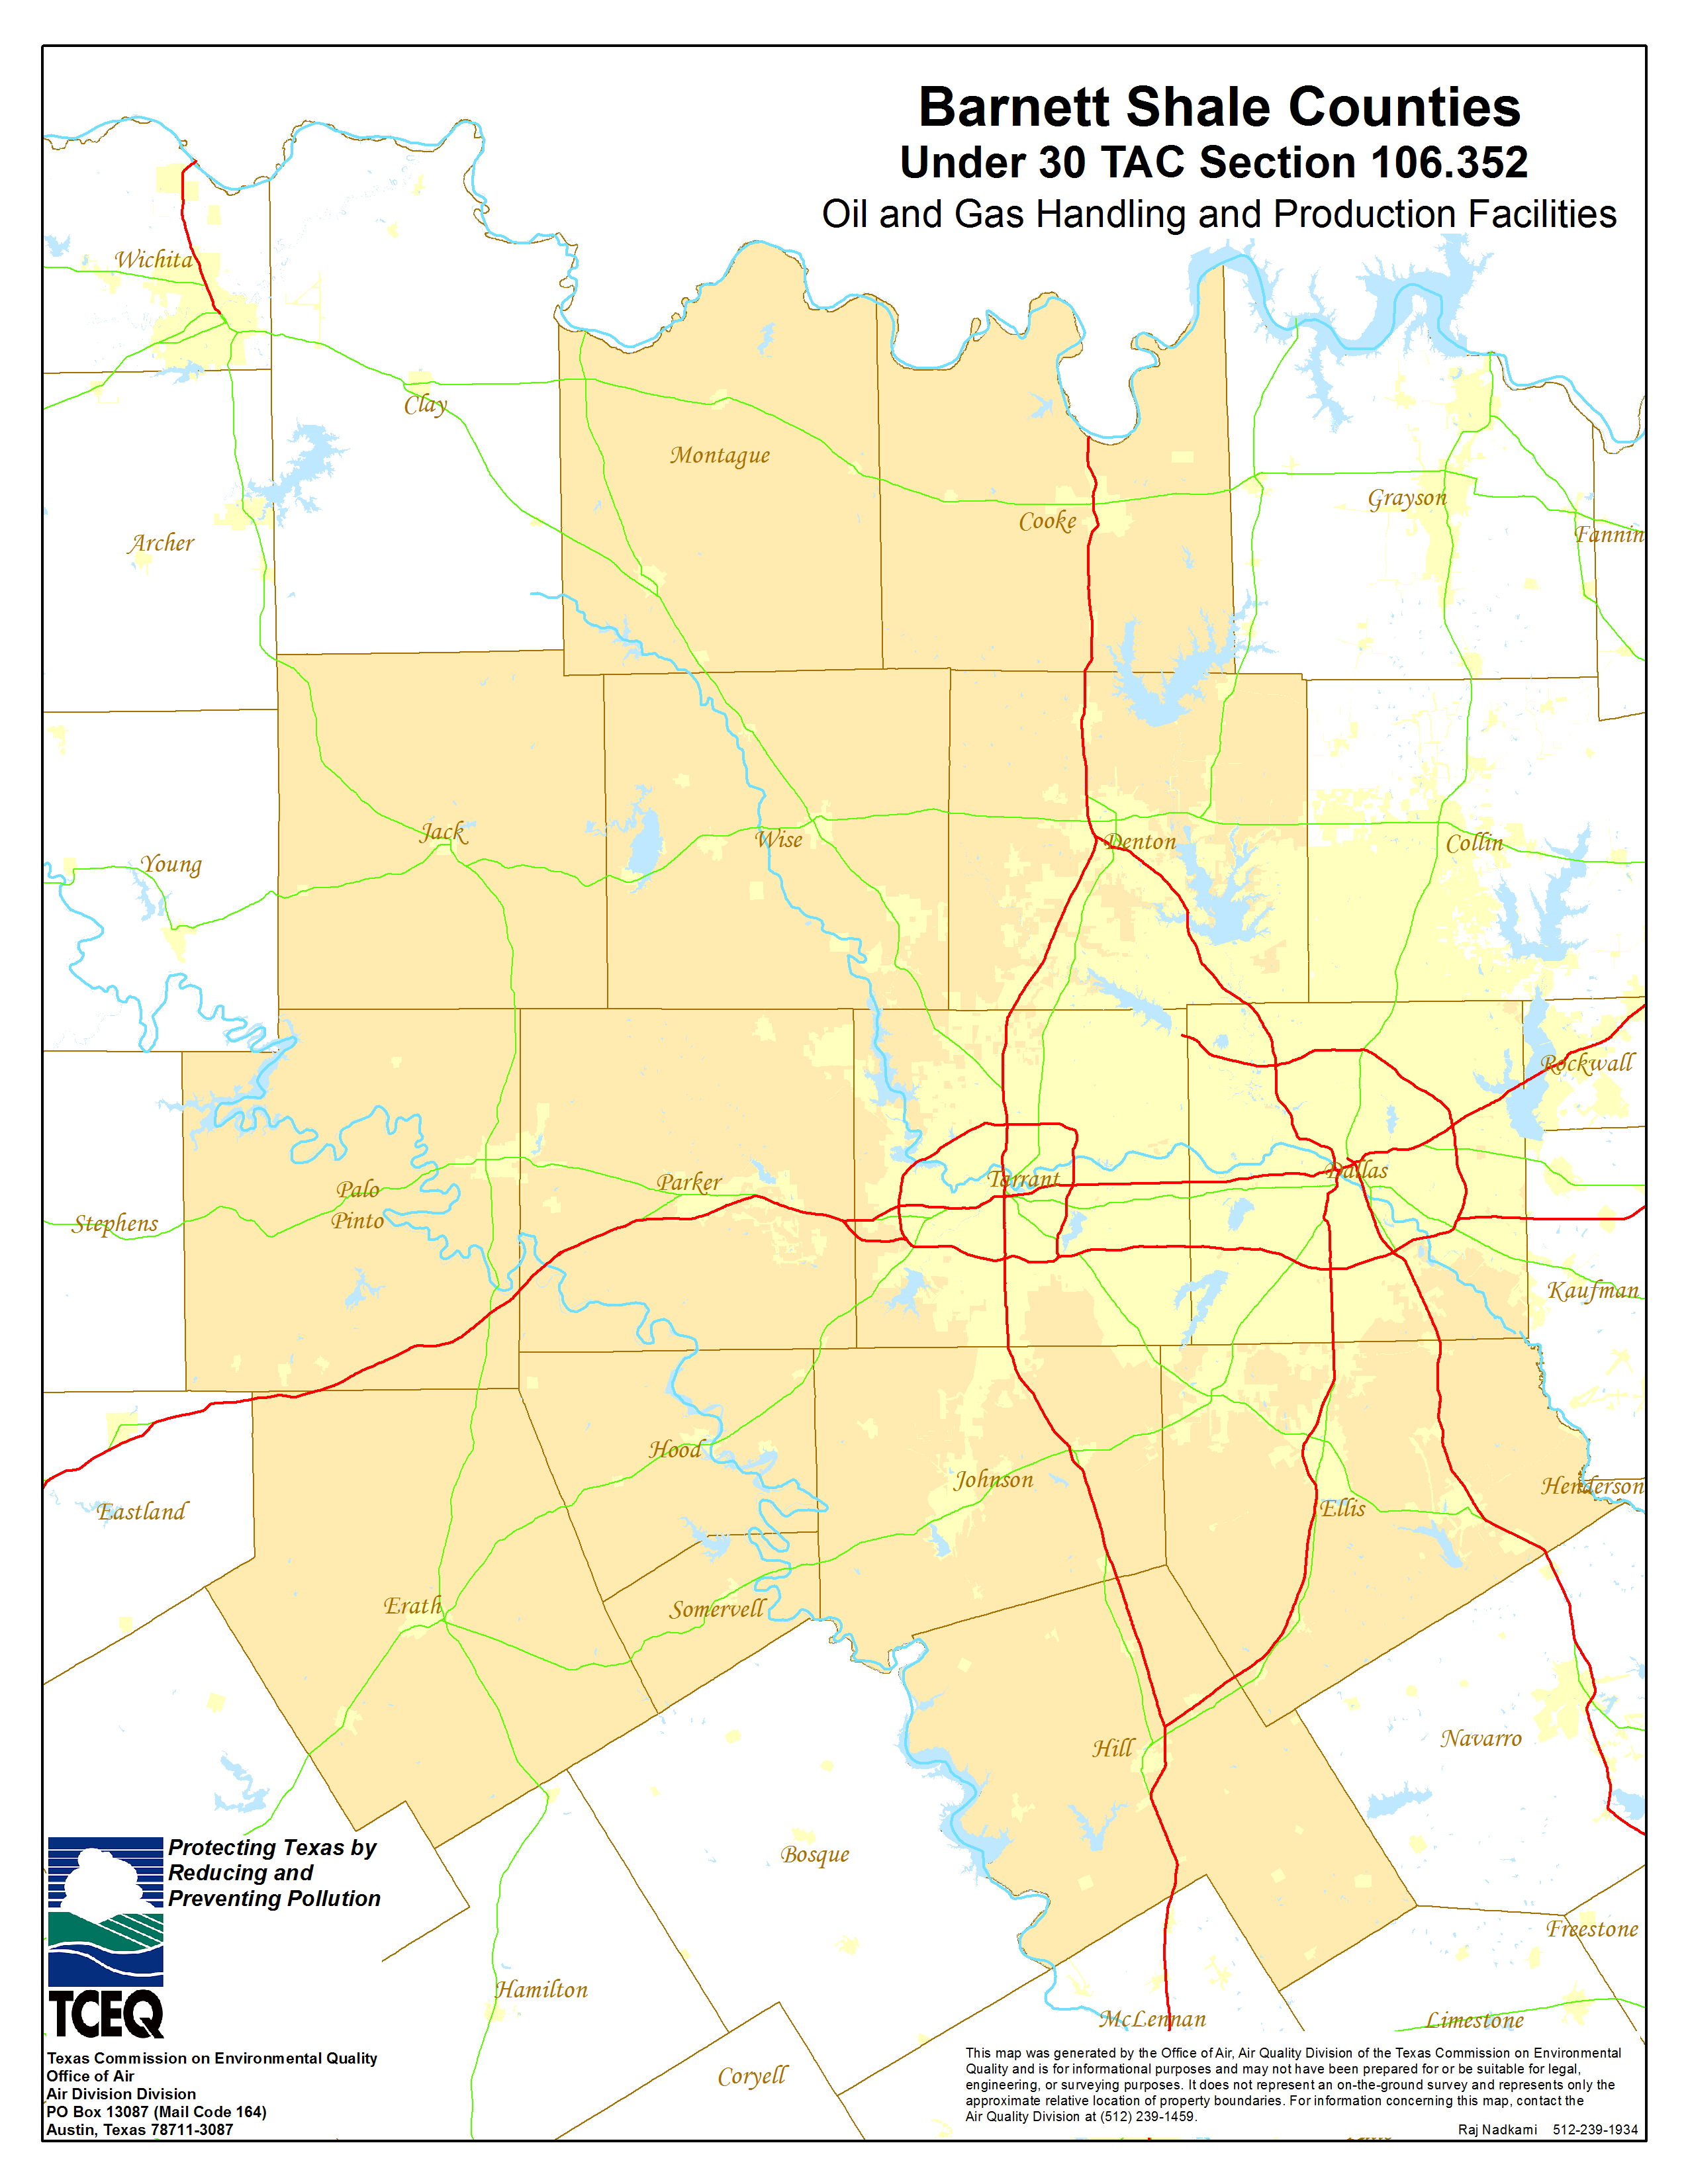 Barnett Shale Counties Map